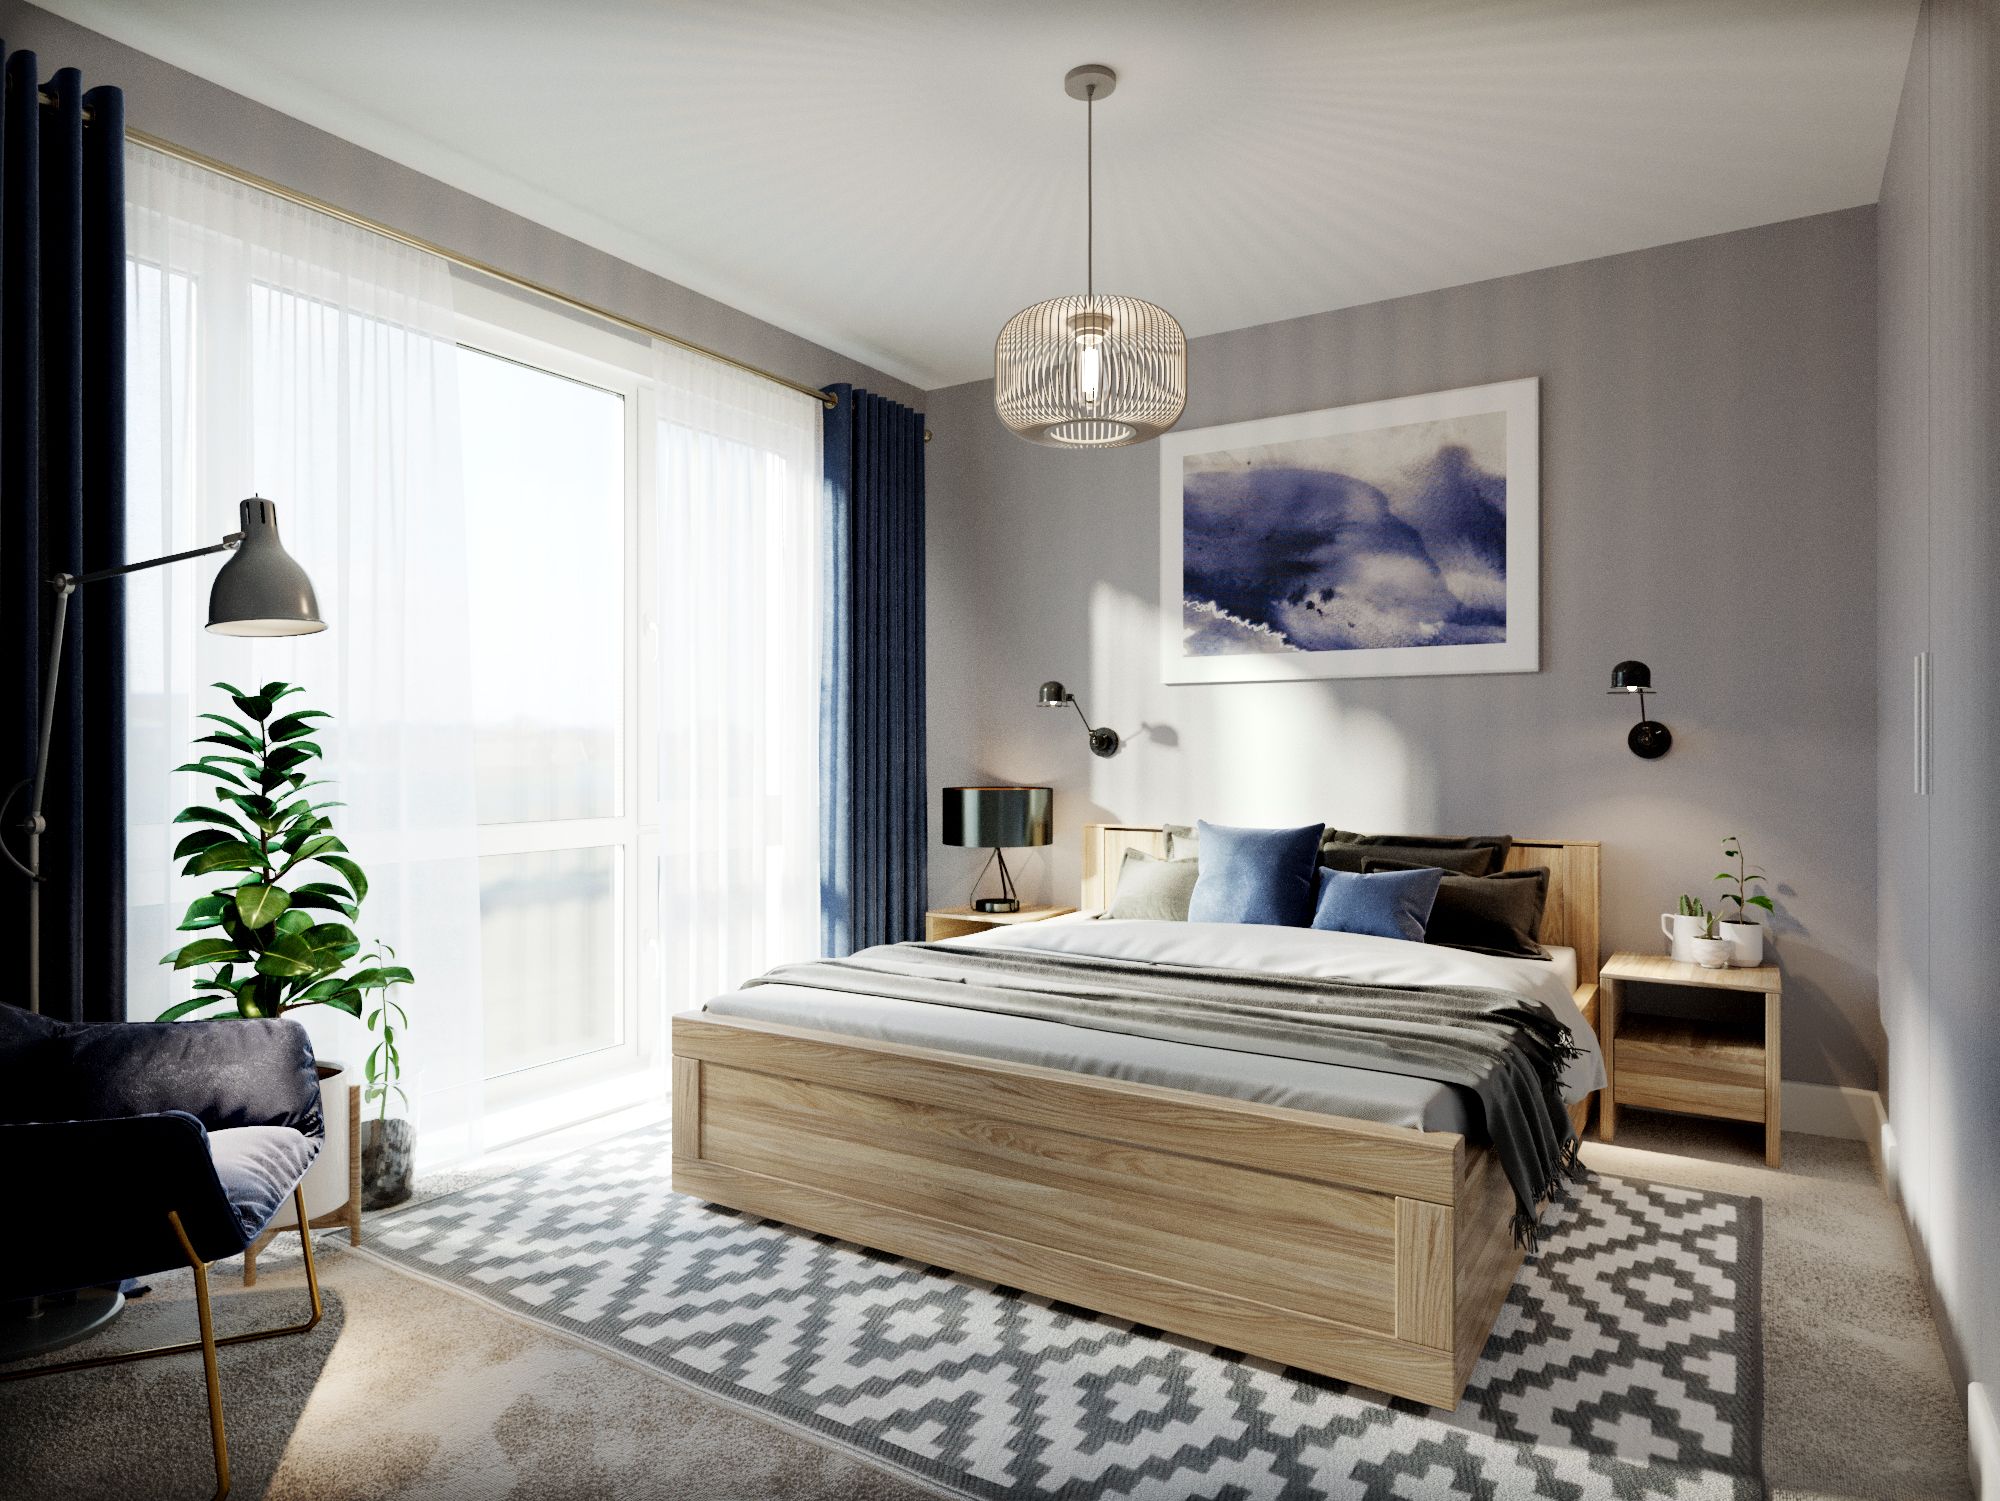 property marketing visuals - CYC luxury bedroom cgi visualisation - uk cgi stuio